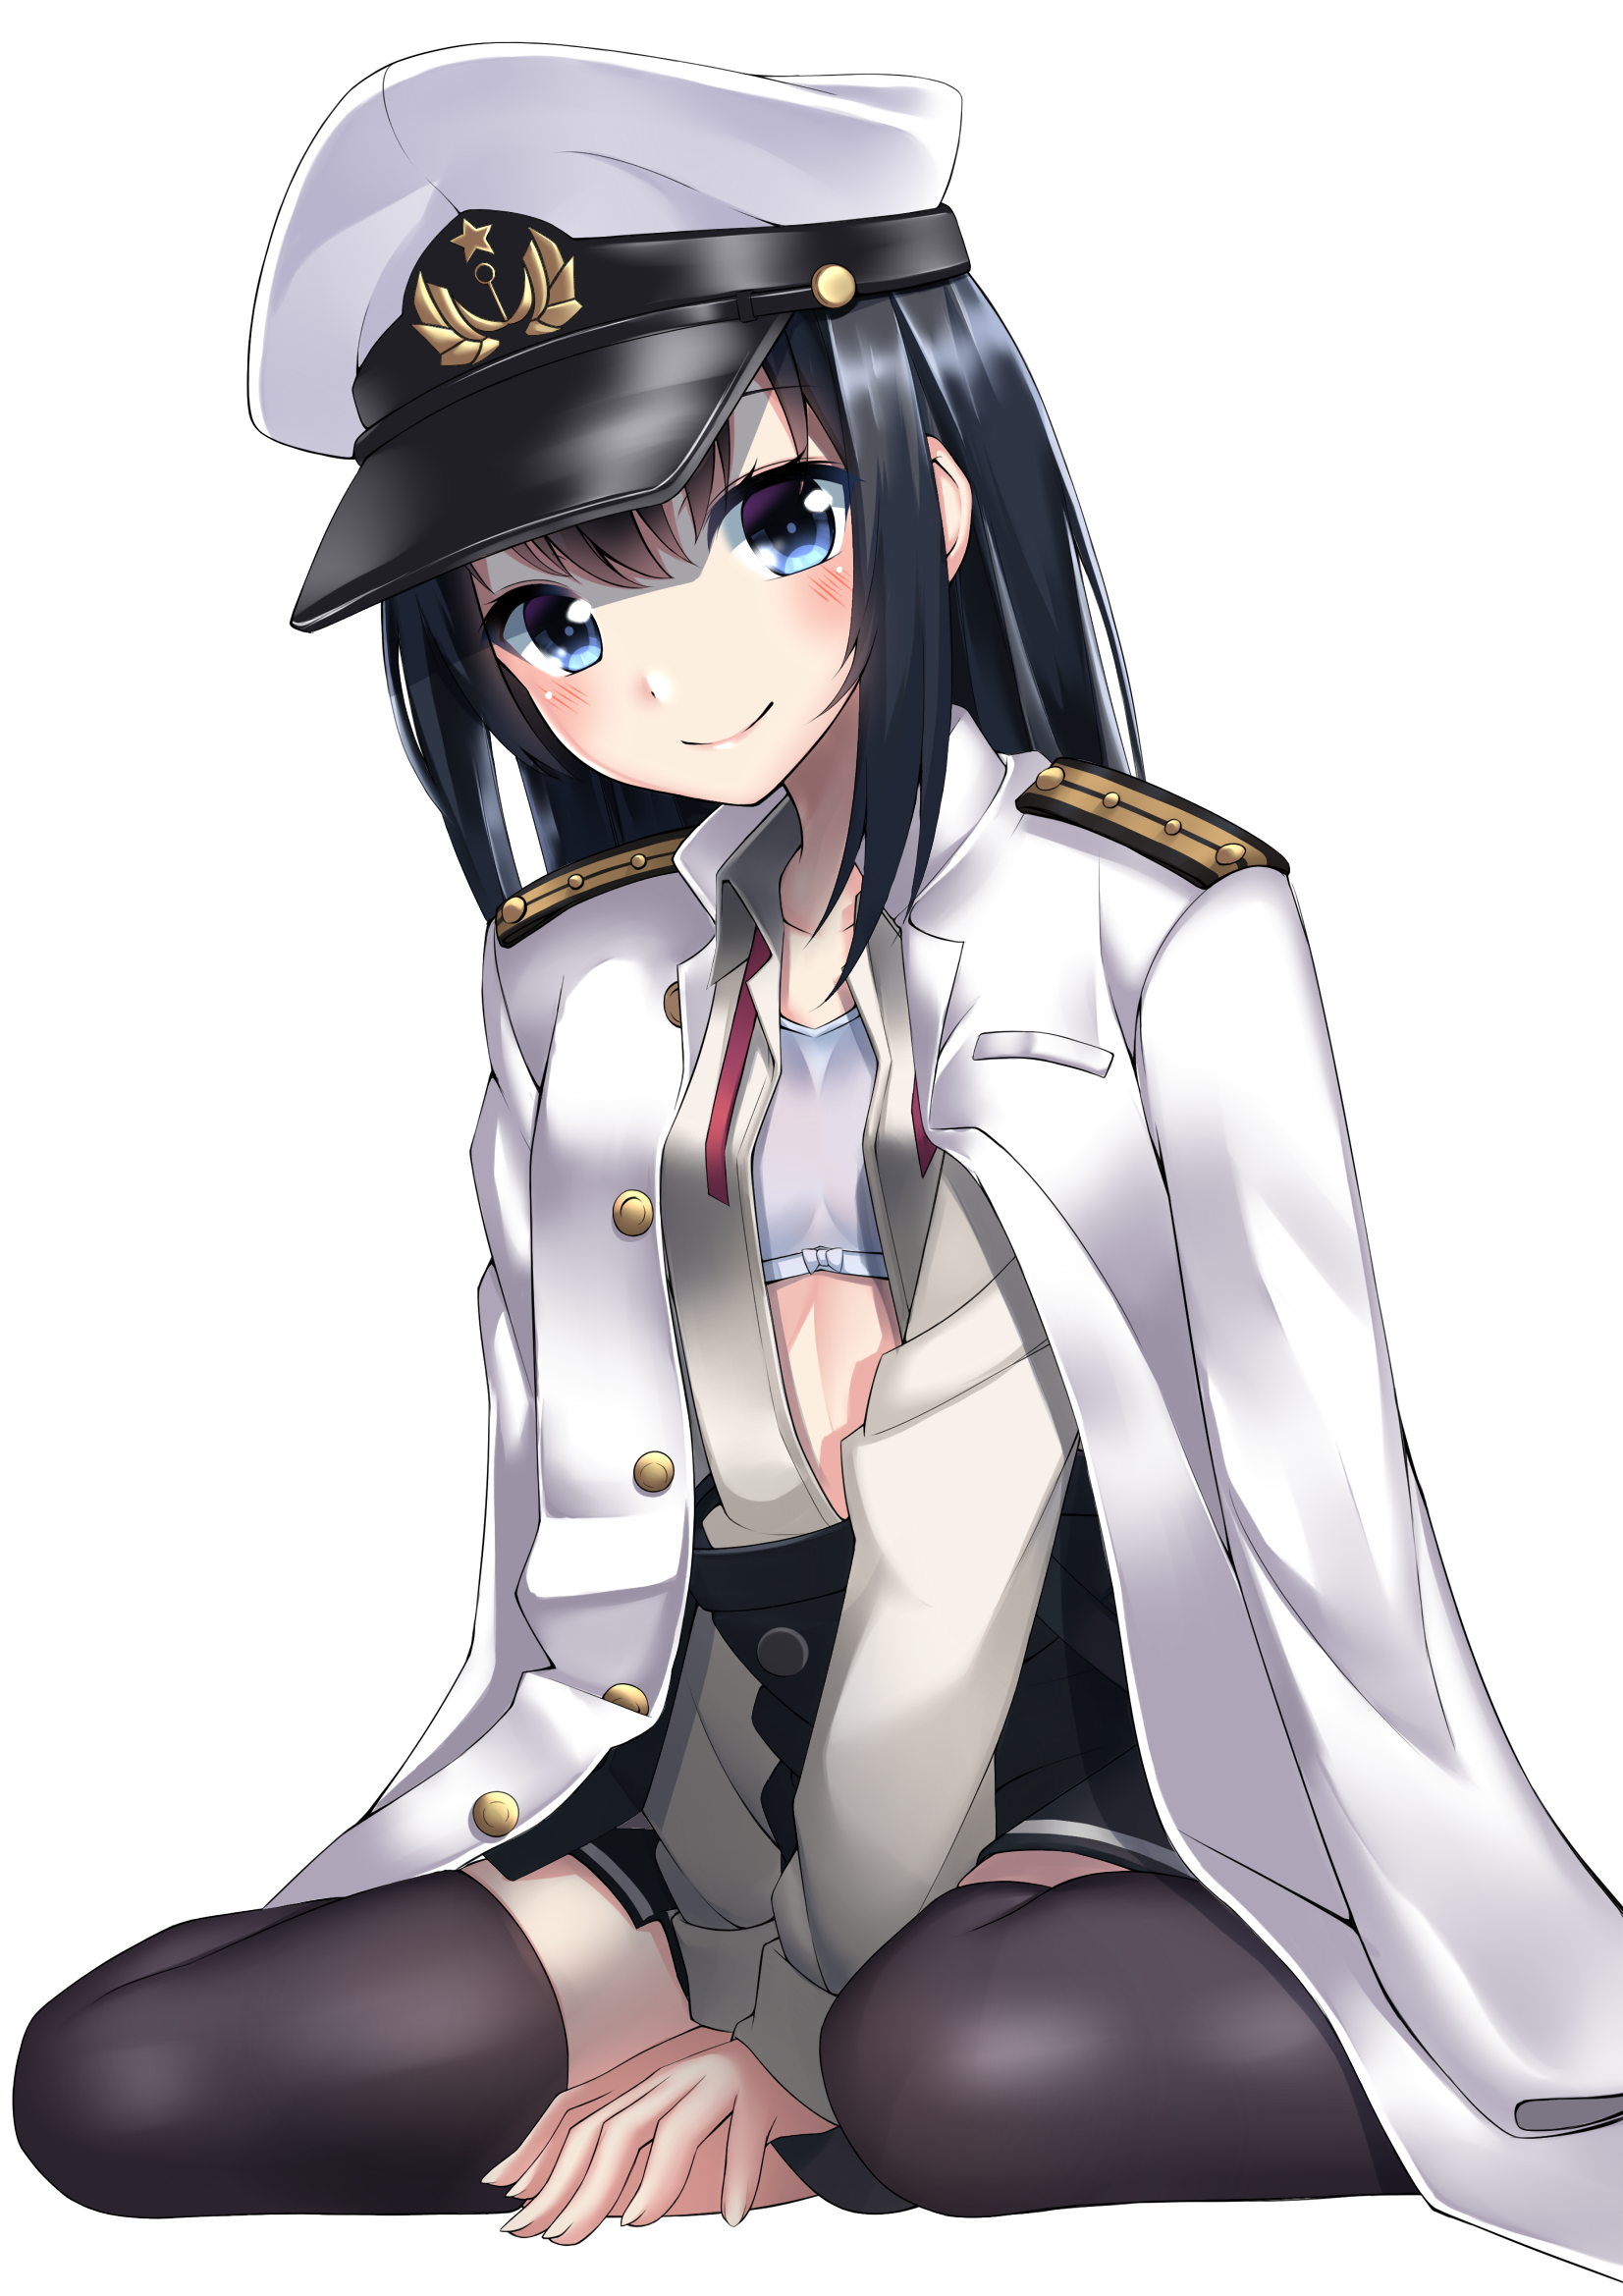 Anime 1653x2338 anime anime girls Kantai Collection Admiral (KanColle) long hair black hair blue eyes uniform stockings bra